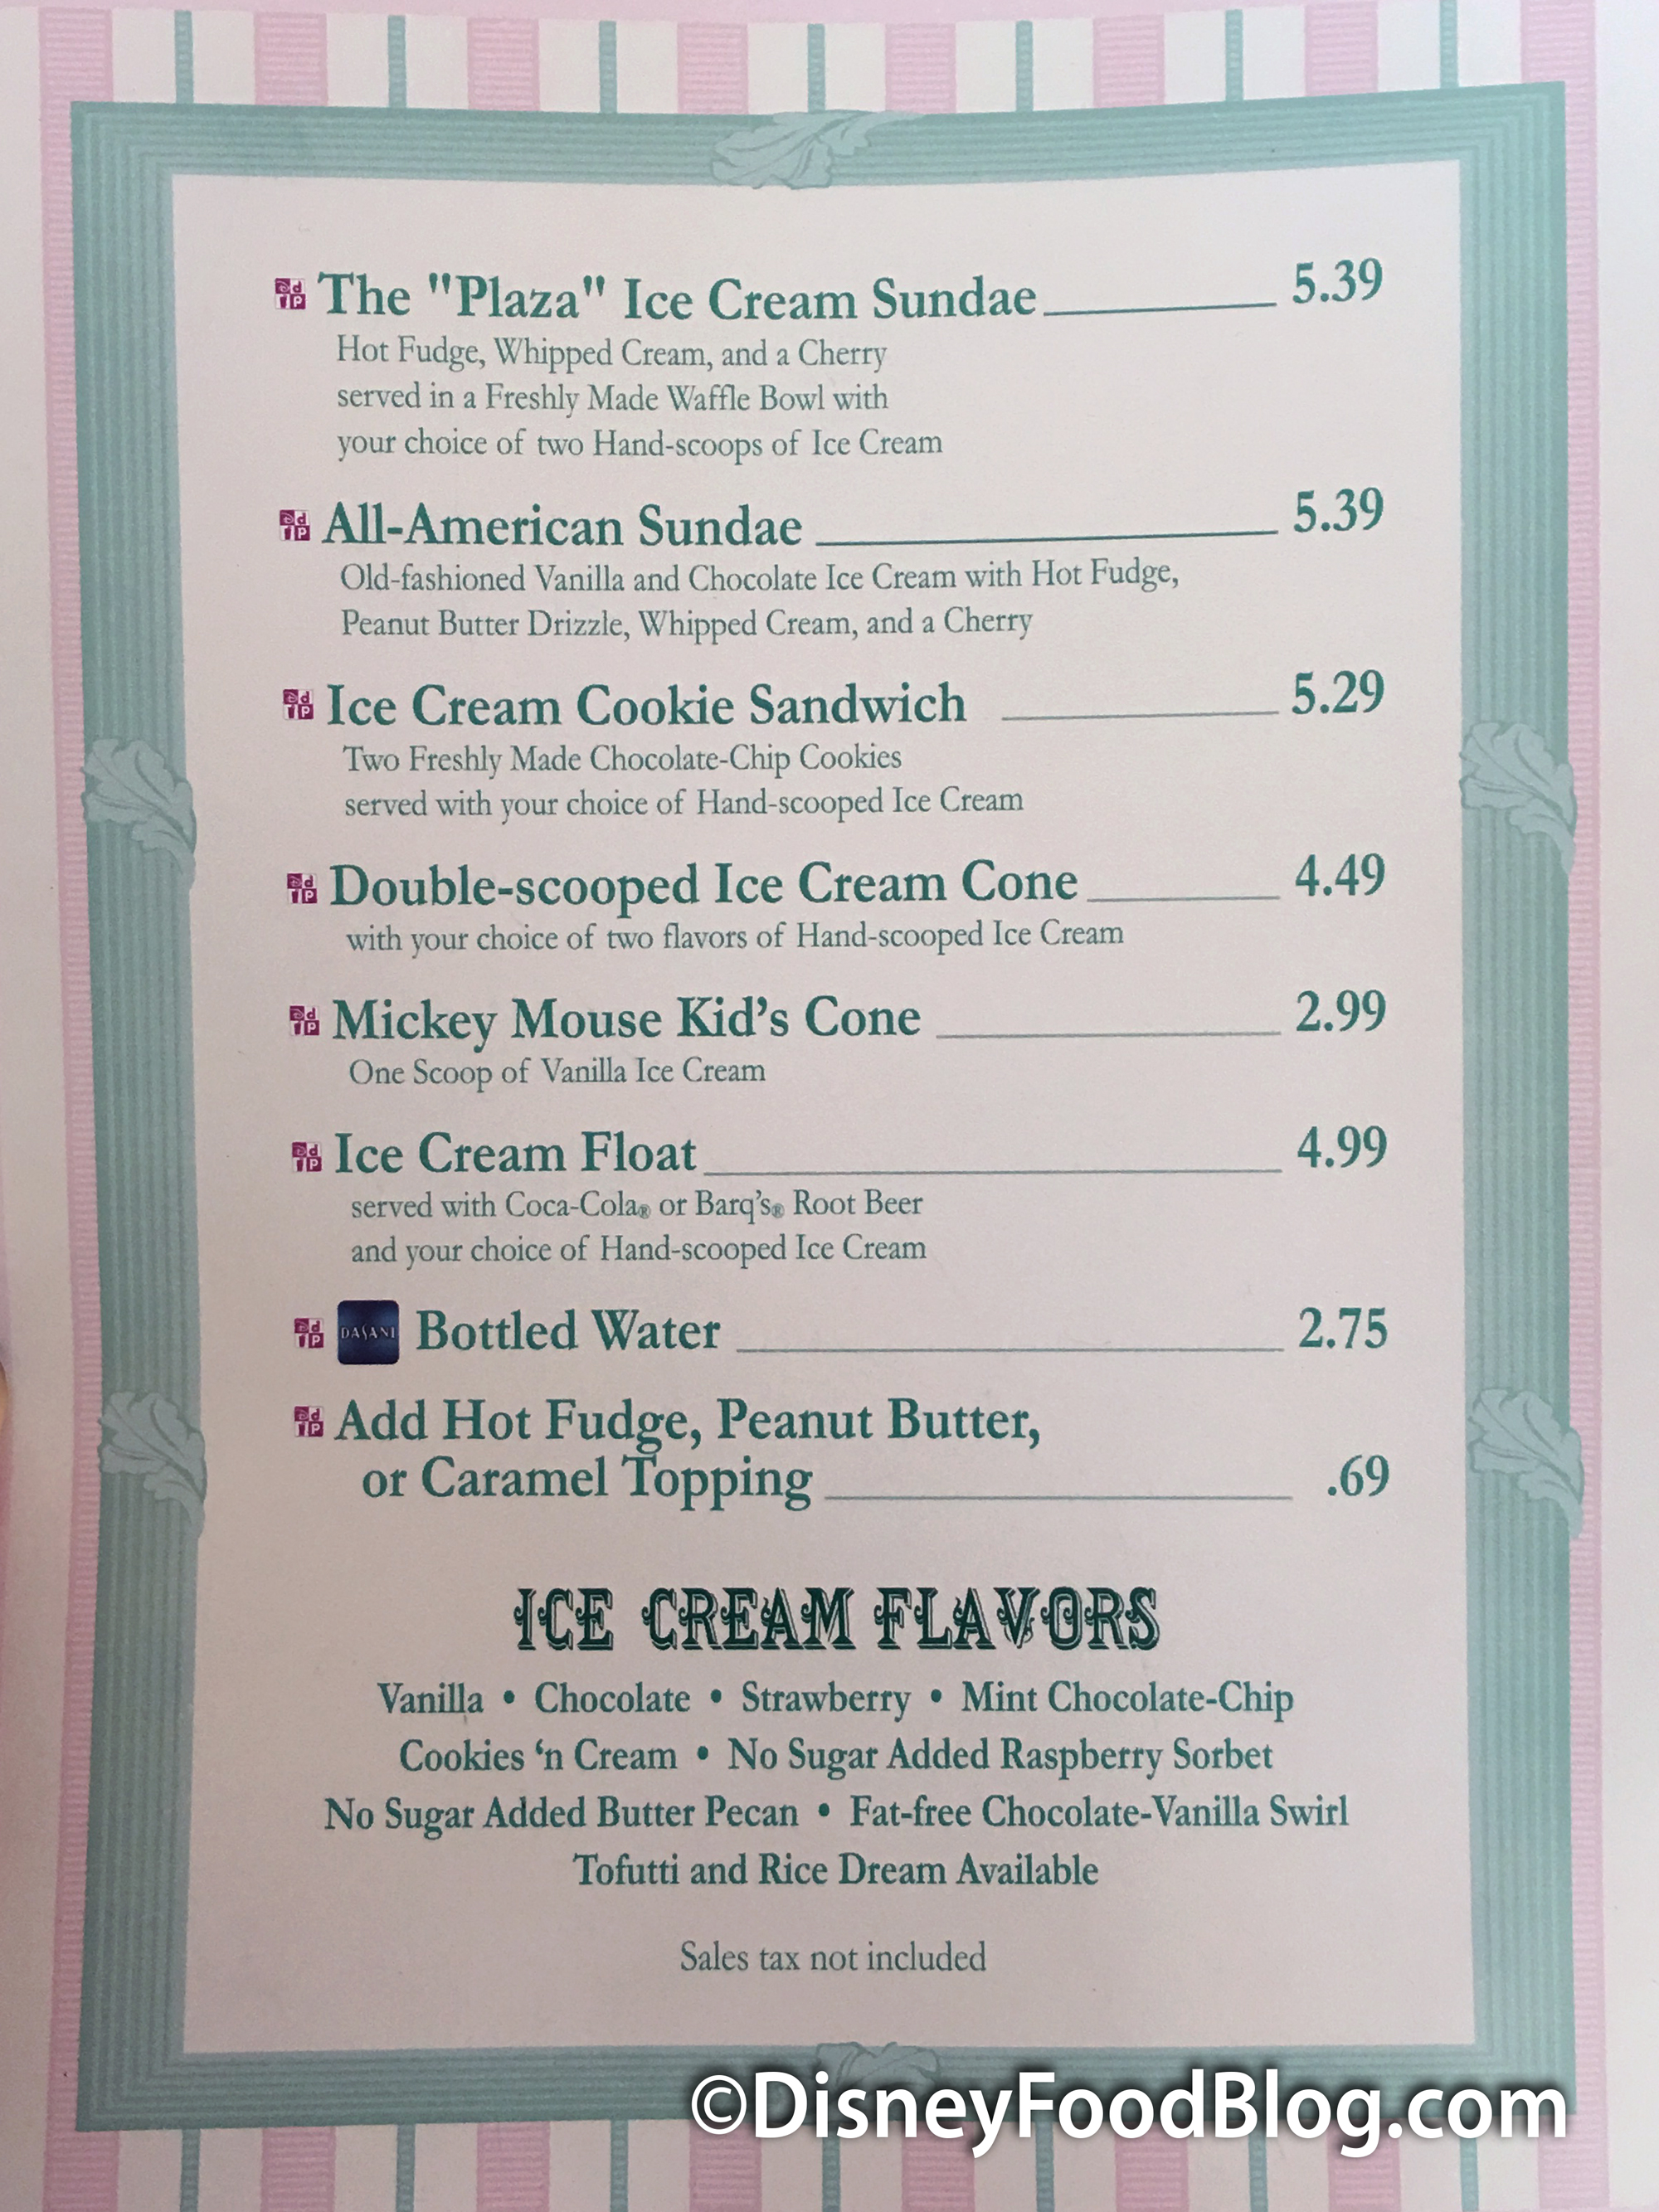 Plaza Ice Cream Parlor menu 